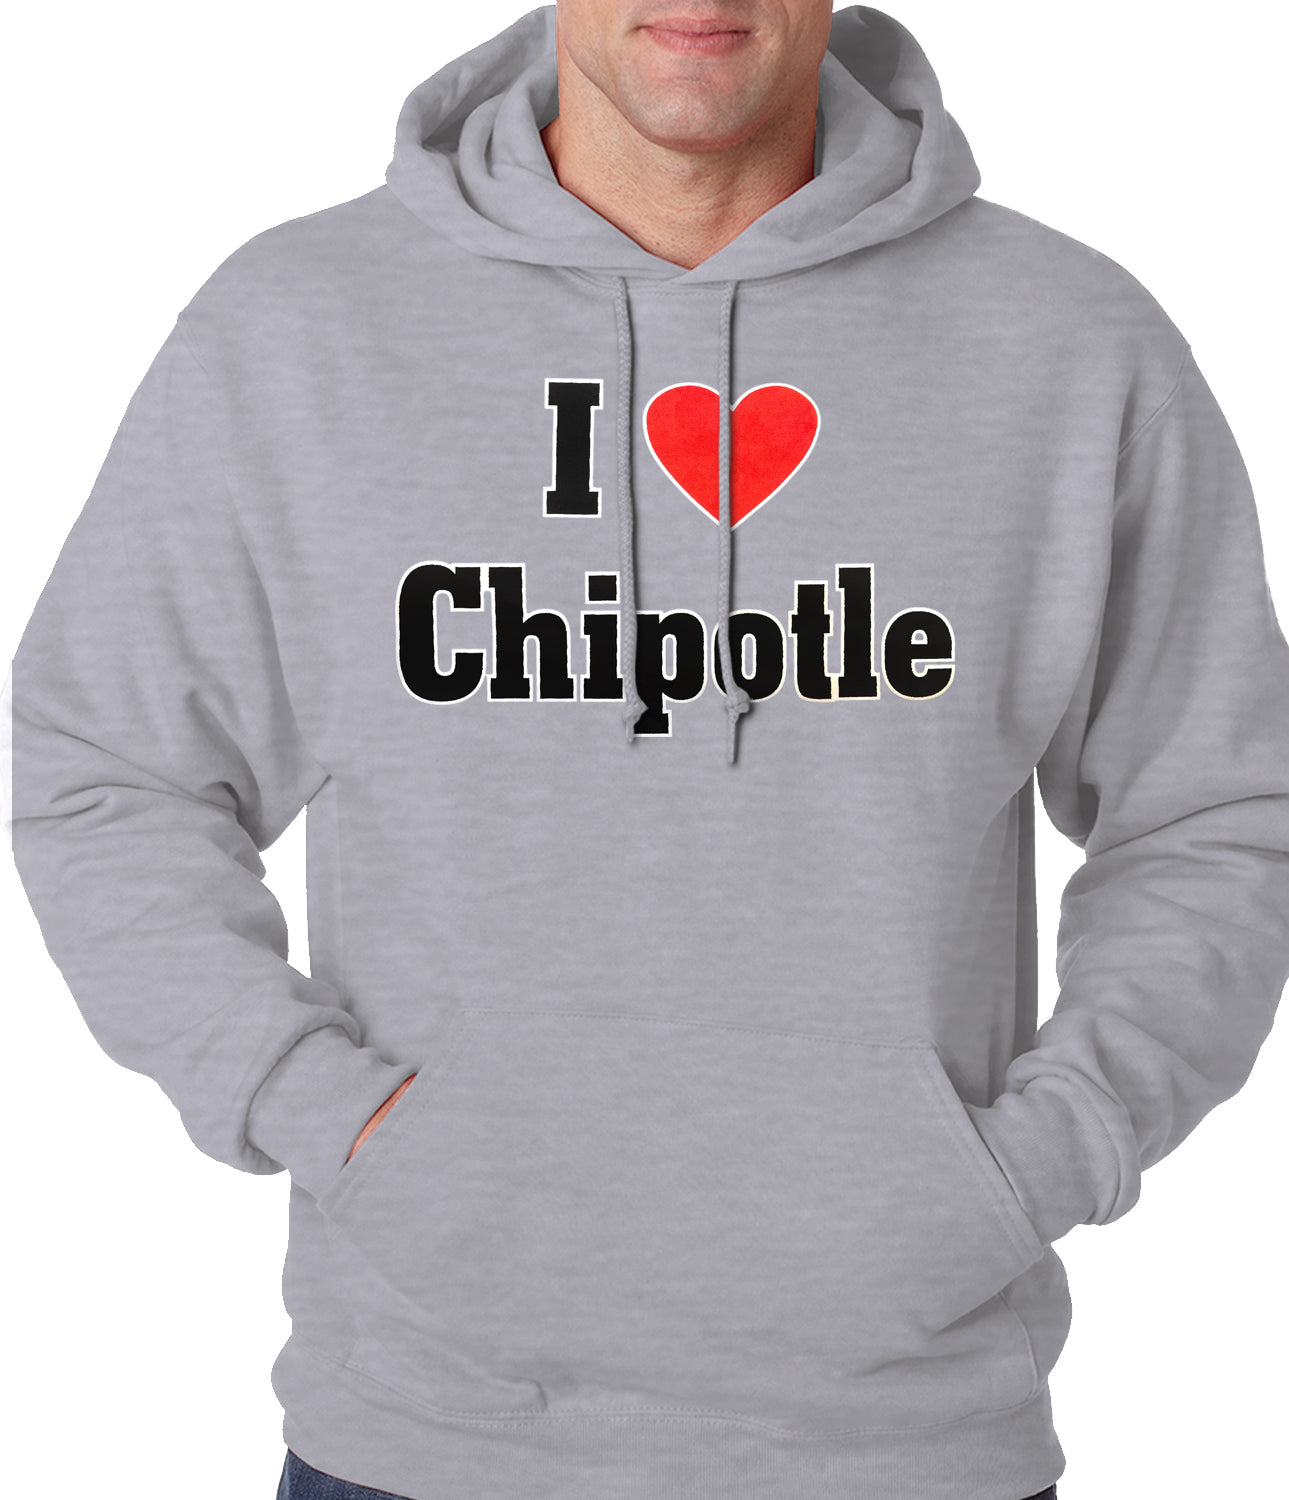 I Love Chipotle Adult Hoodie